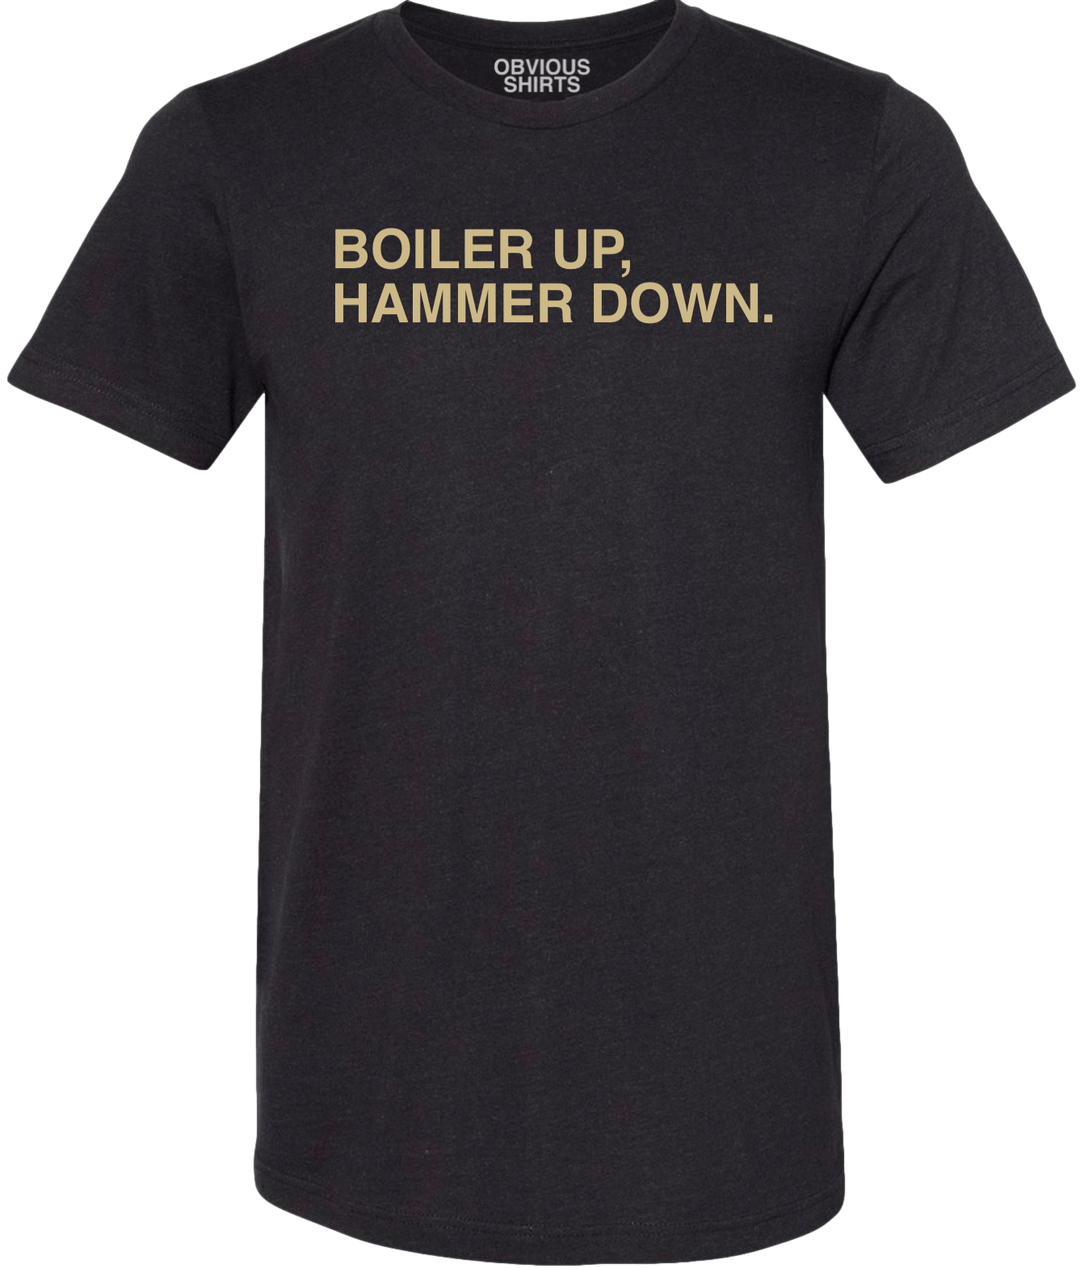 BOILER UP HAMMER DOWN - OBVIOUS SHIRTS.